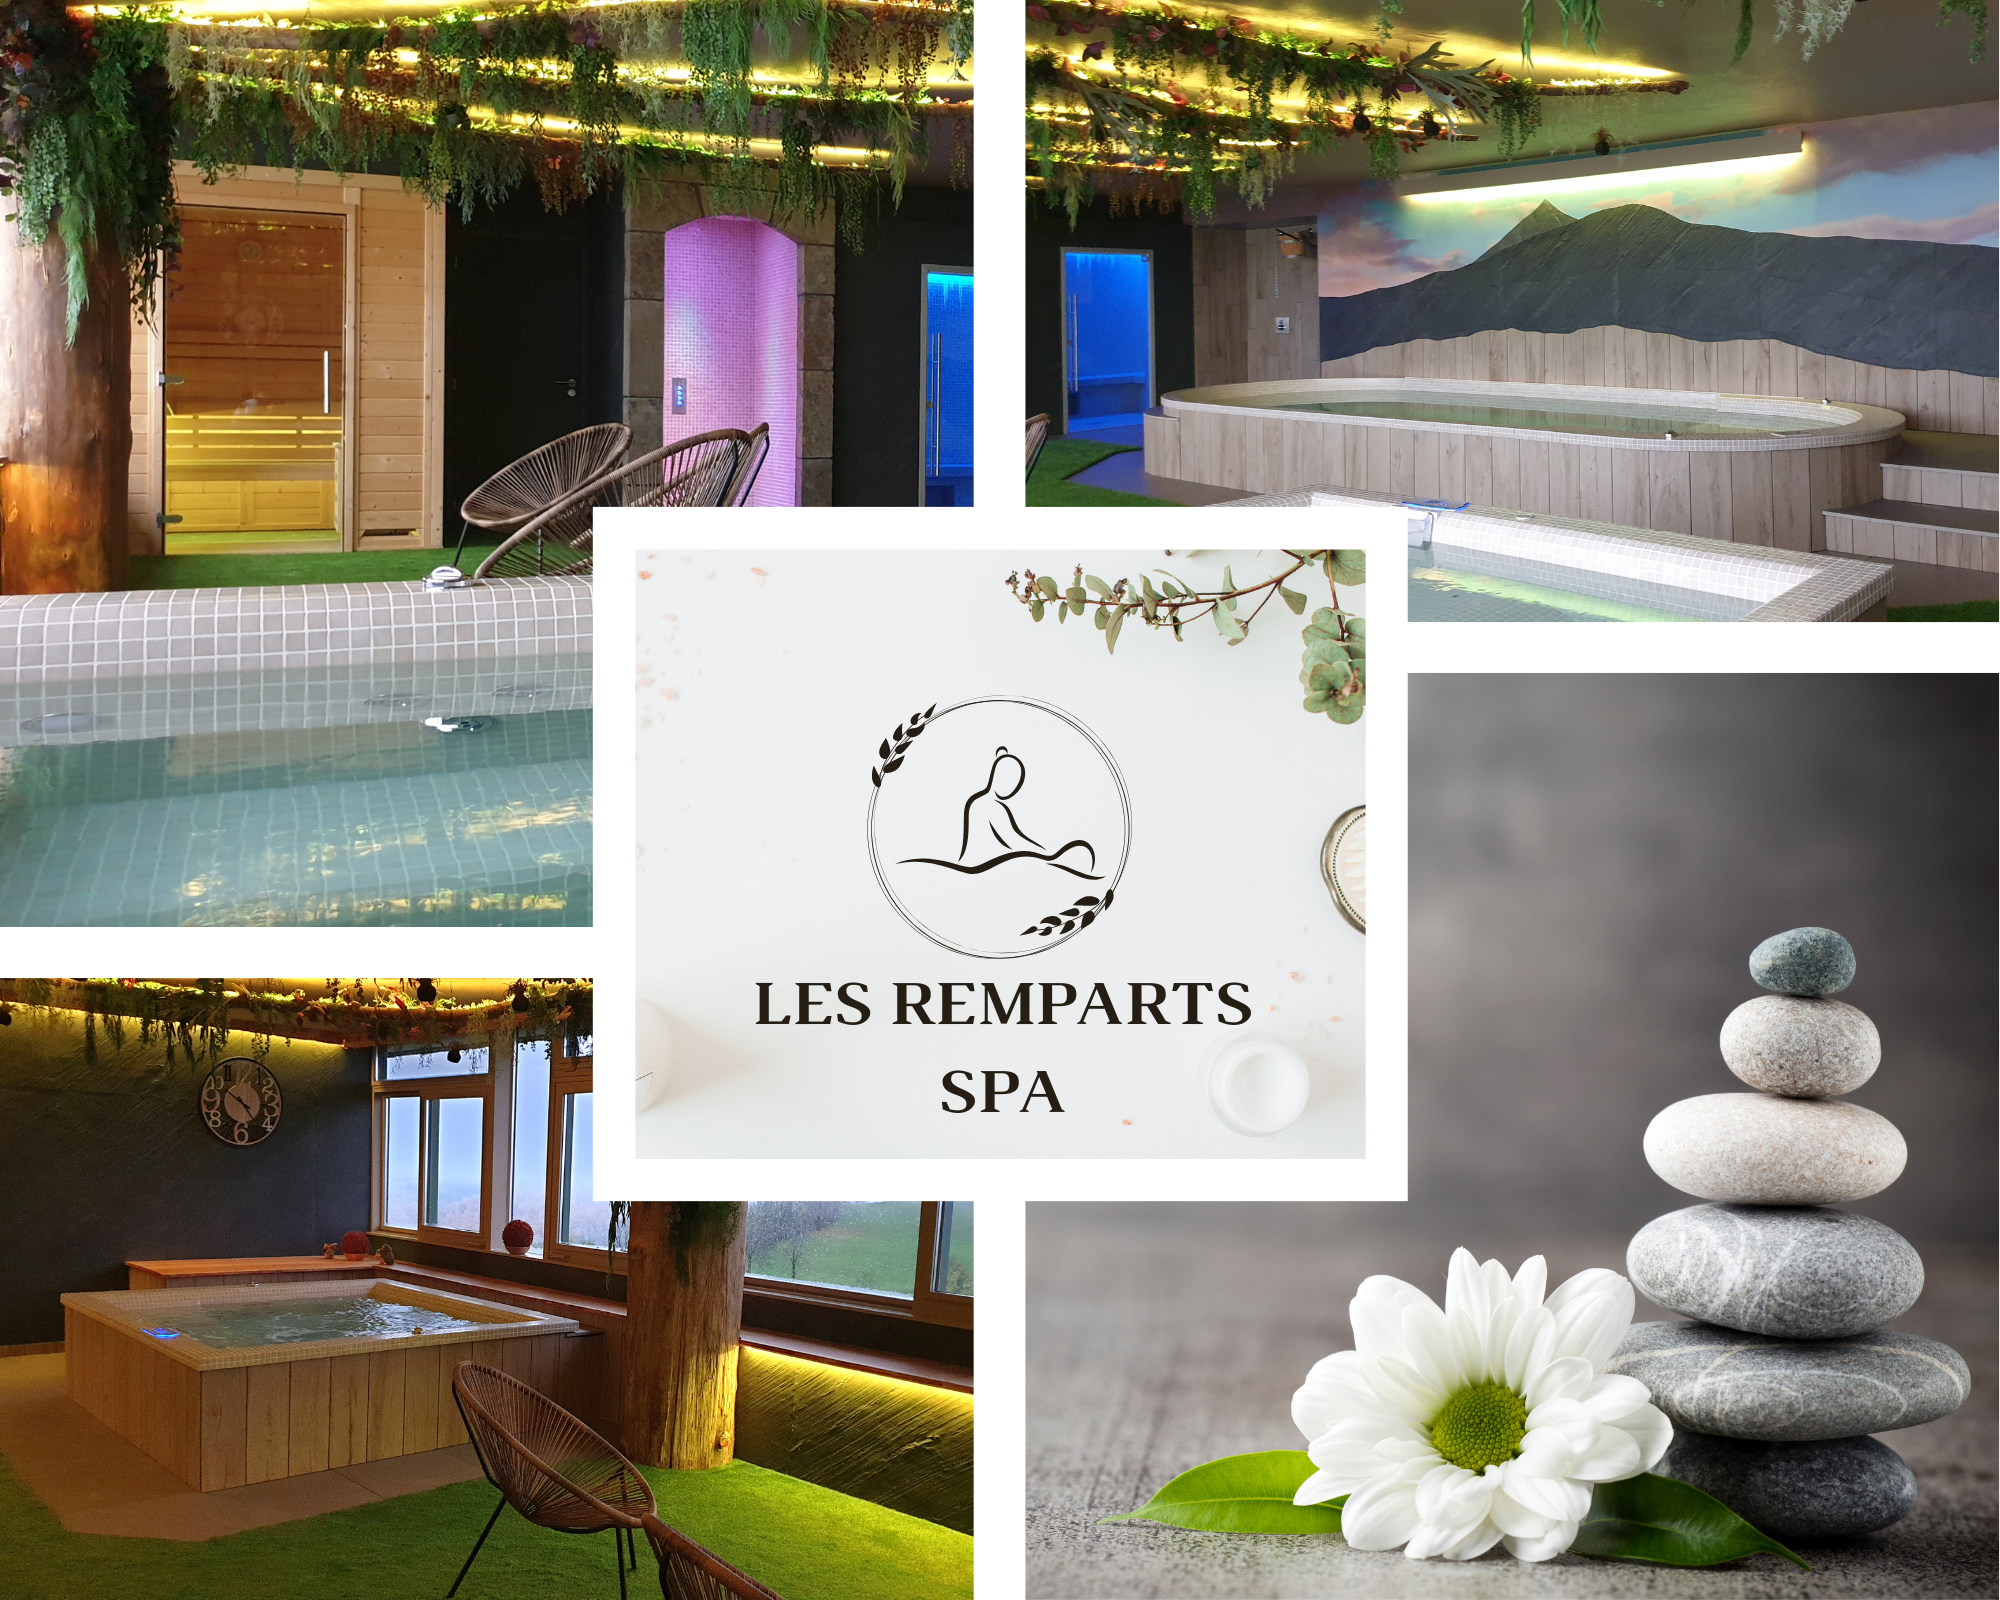 "Spa Les Remparts - Salers"